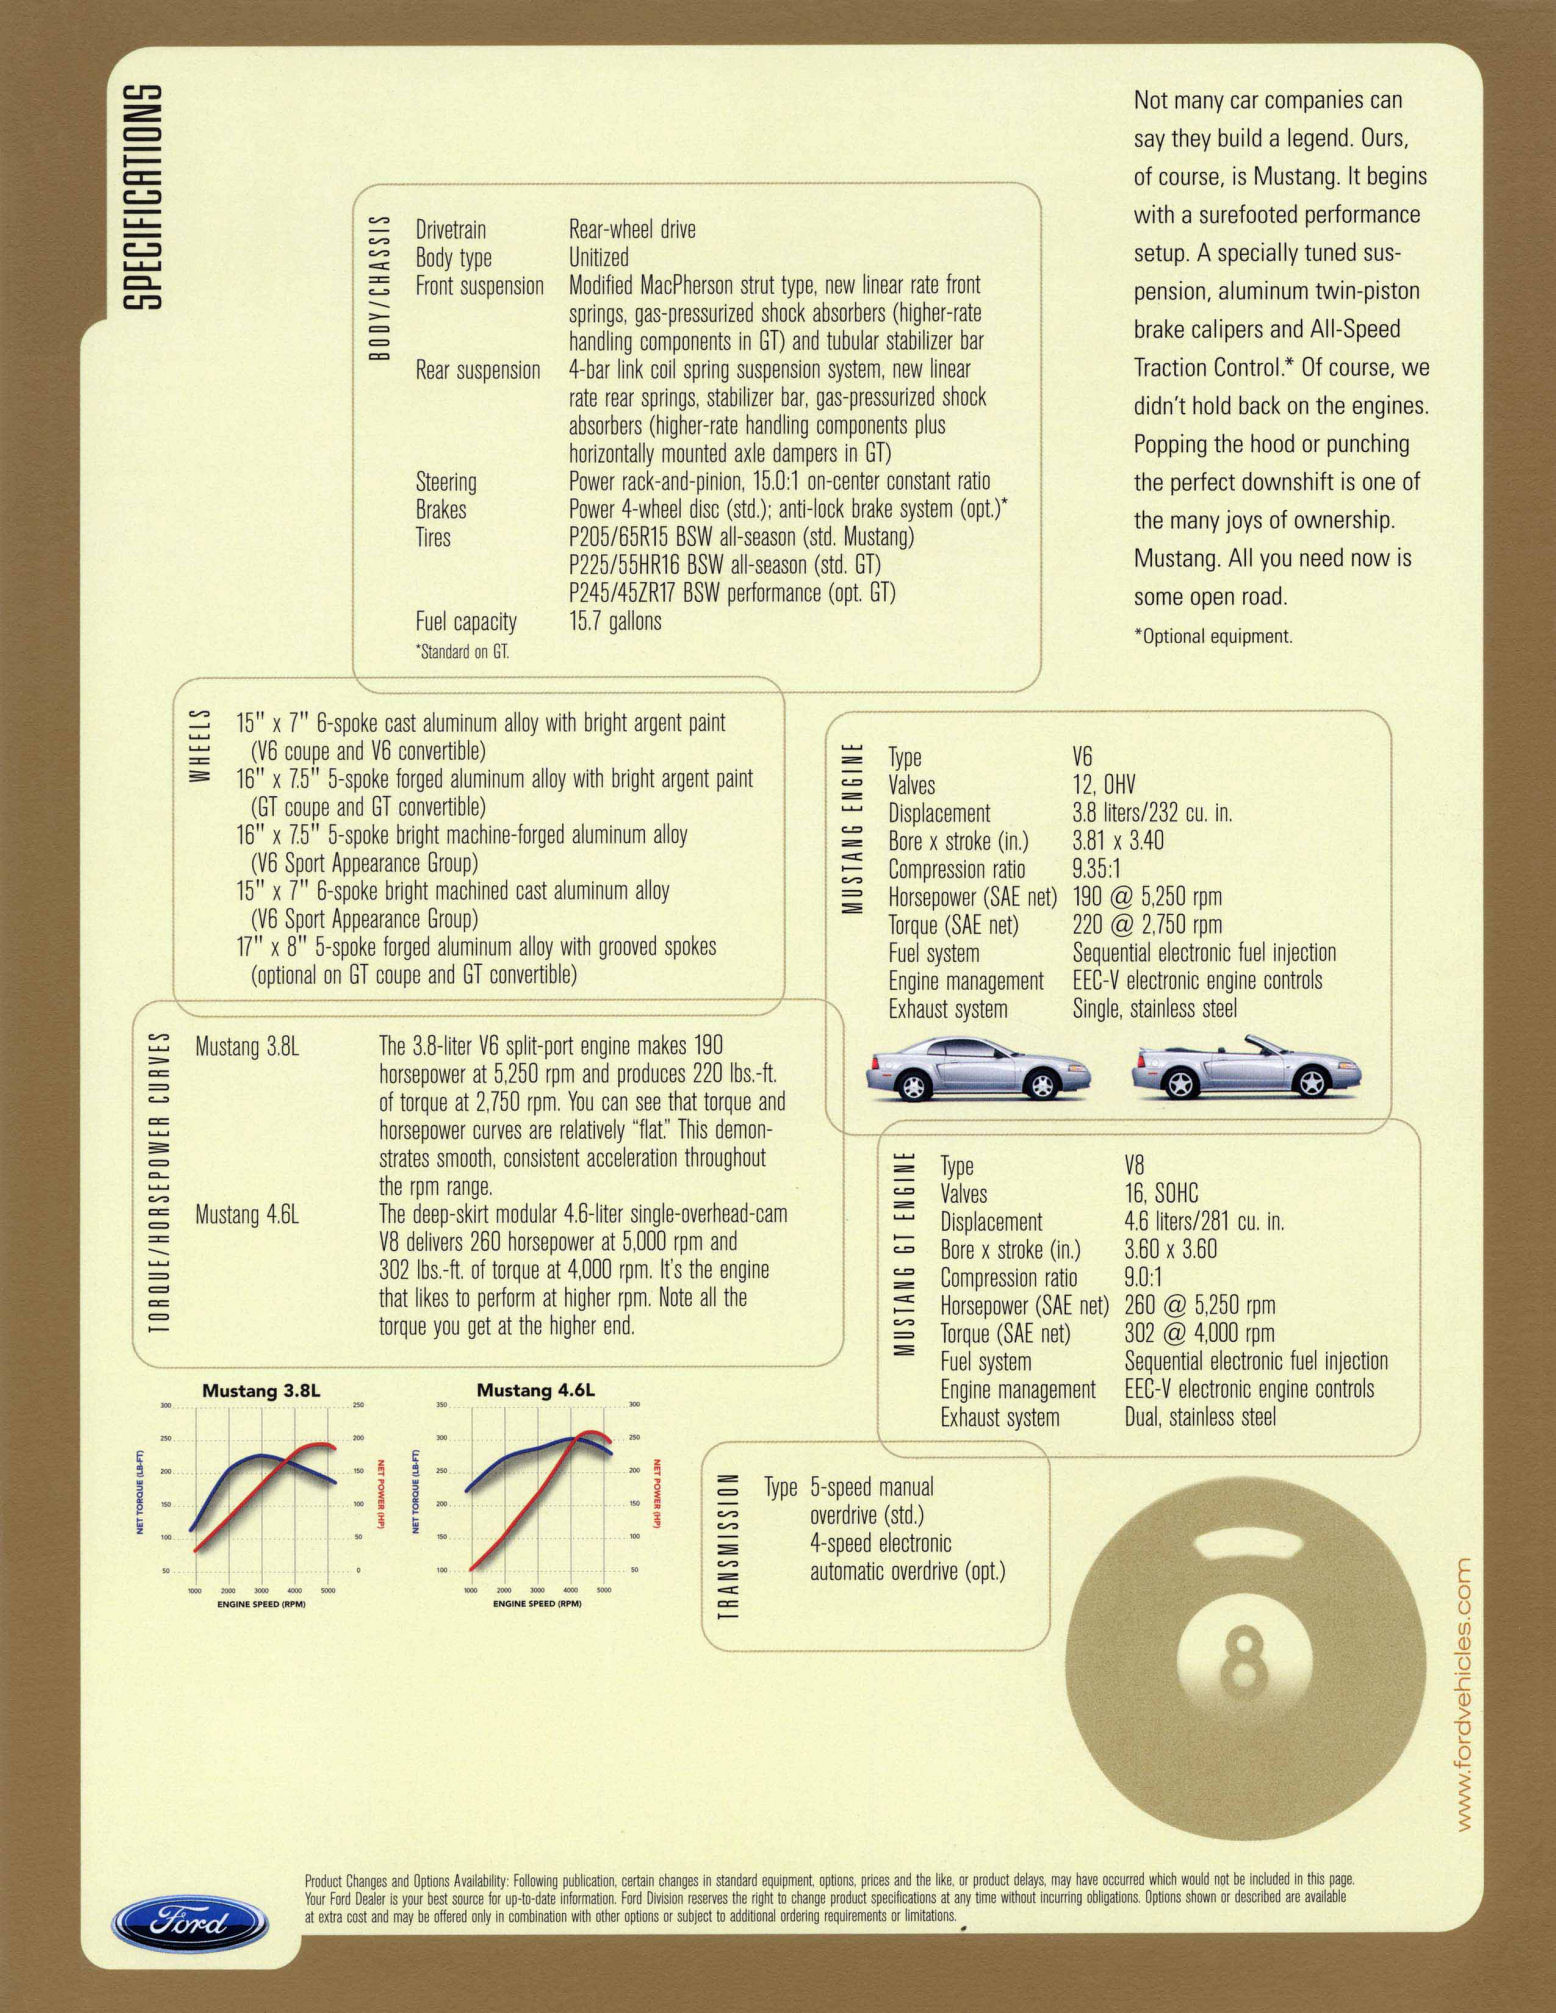 2000_Ford_Mustang_Data_Sheet-02